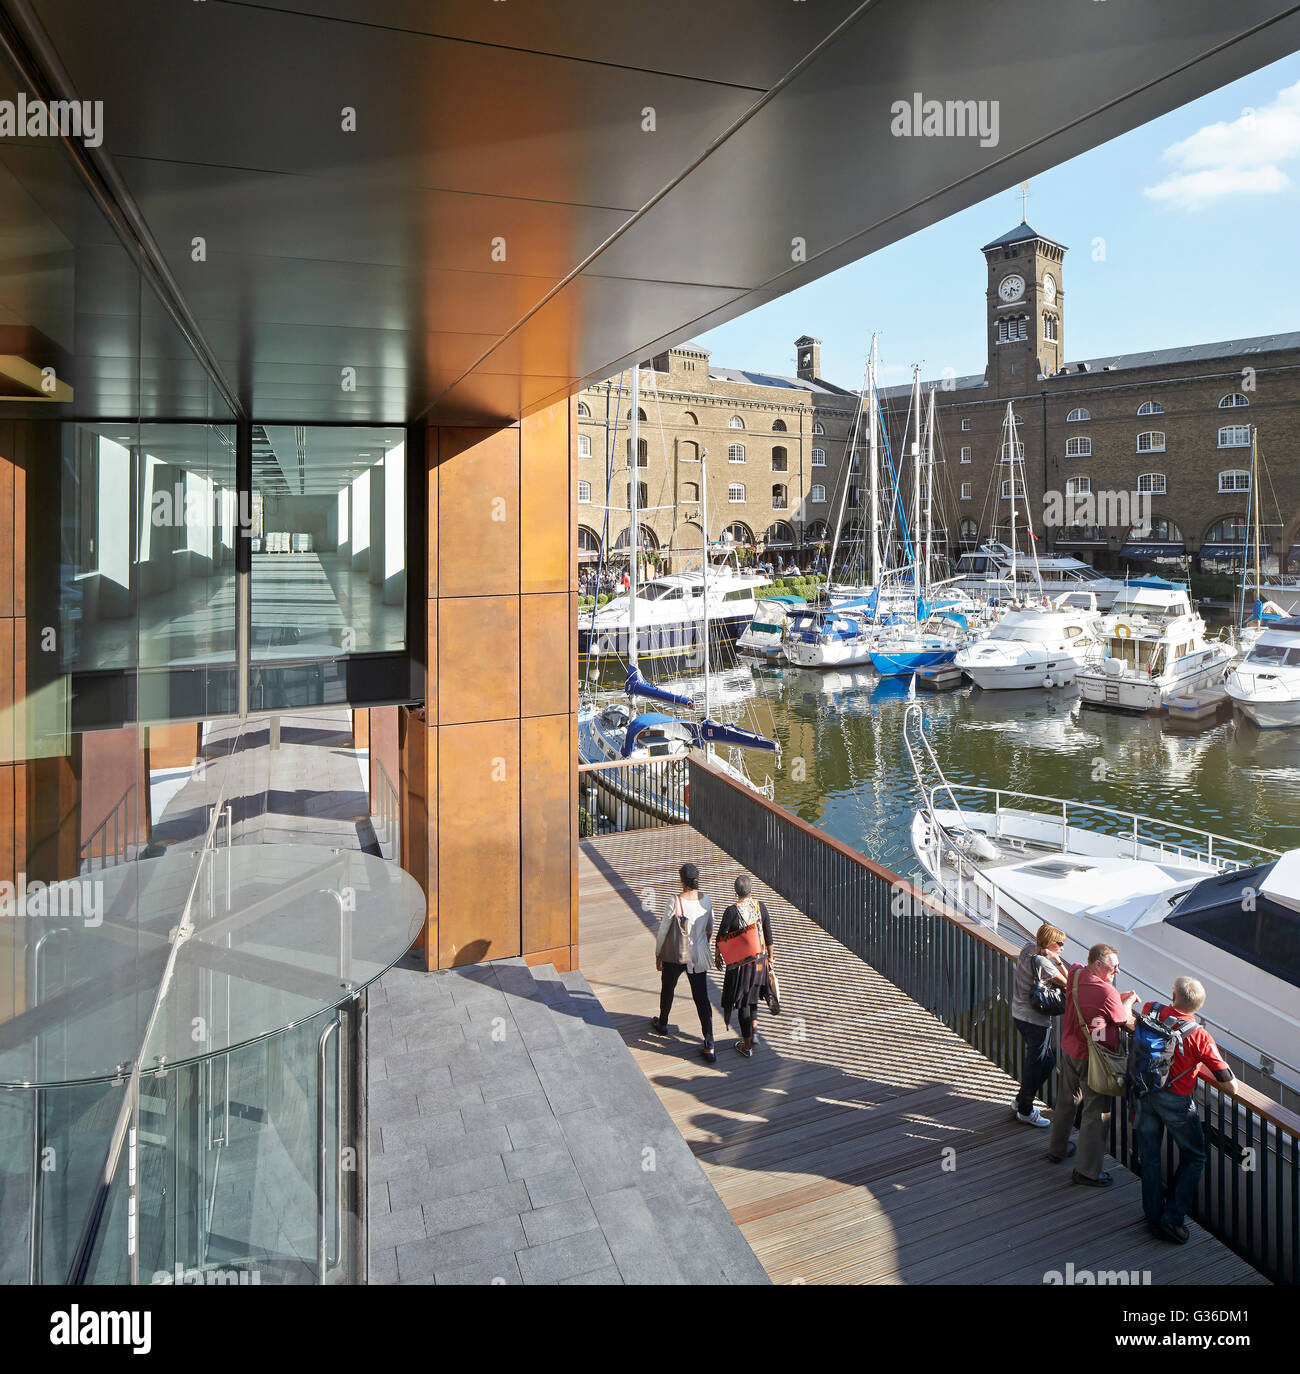 Detail of entrance portal with marina. Commodity Quay, London, United Kingdom. Architect: BuckleyGrayYeoman, 2014. Stock Photo